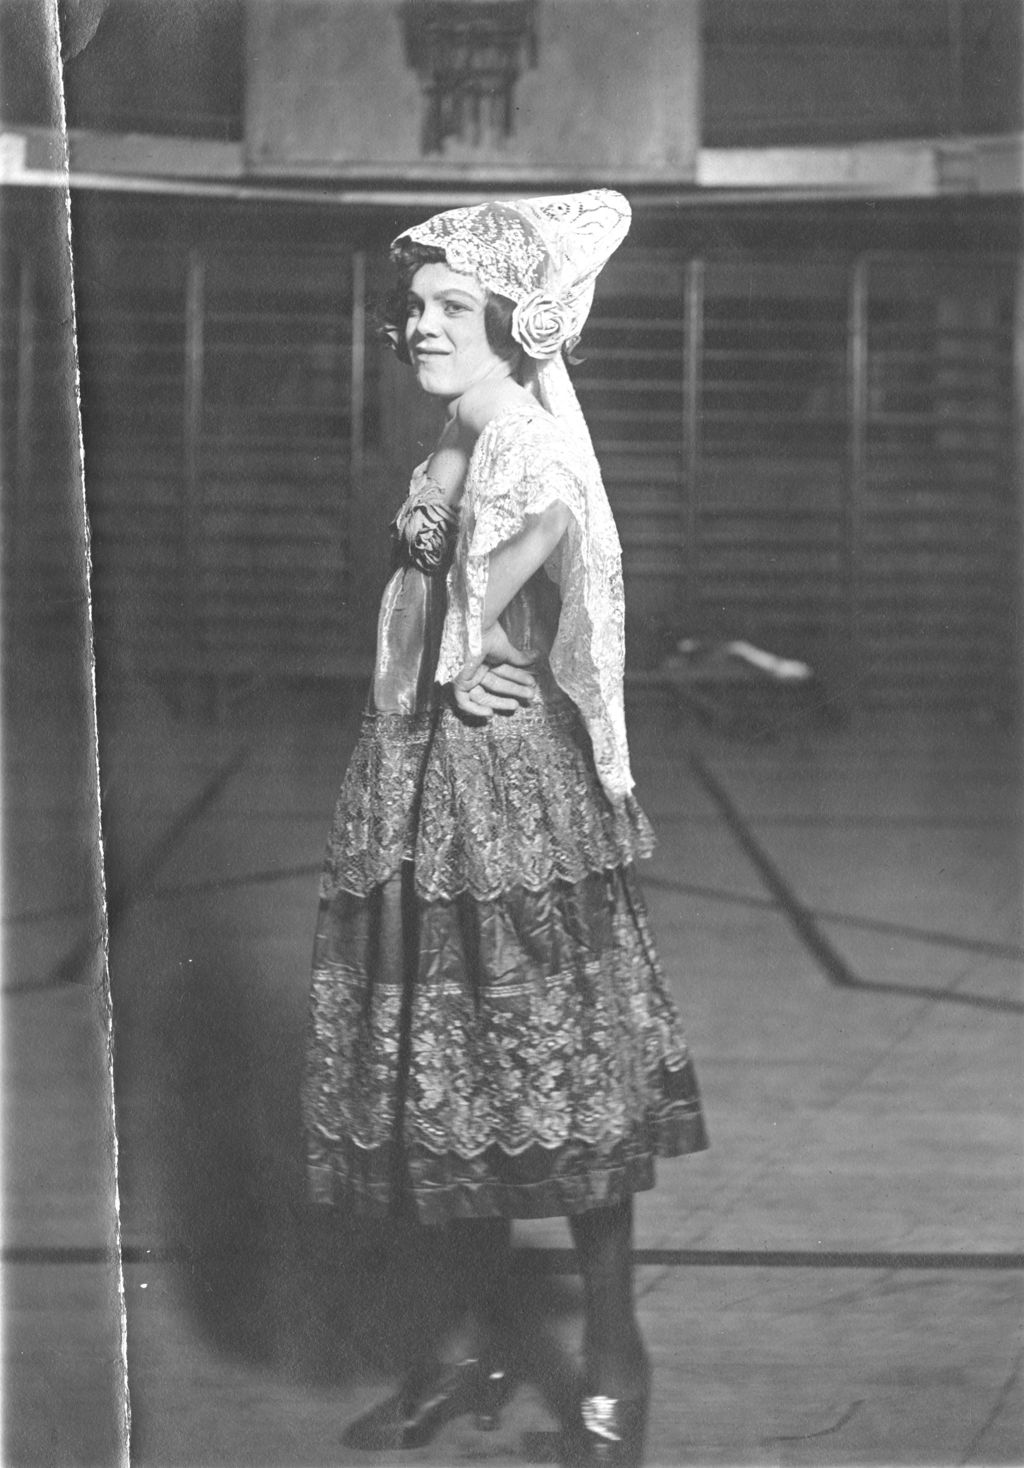 Miniature of Woman in folk costume